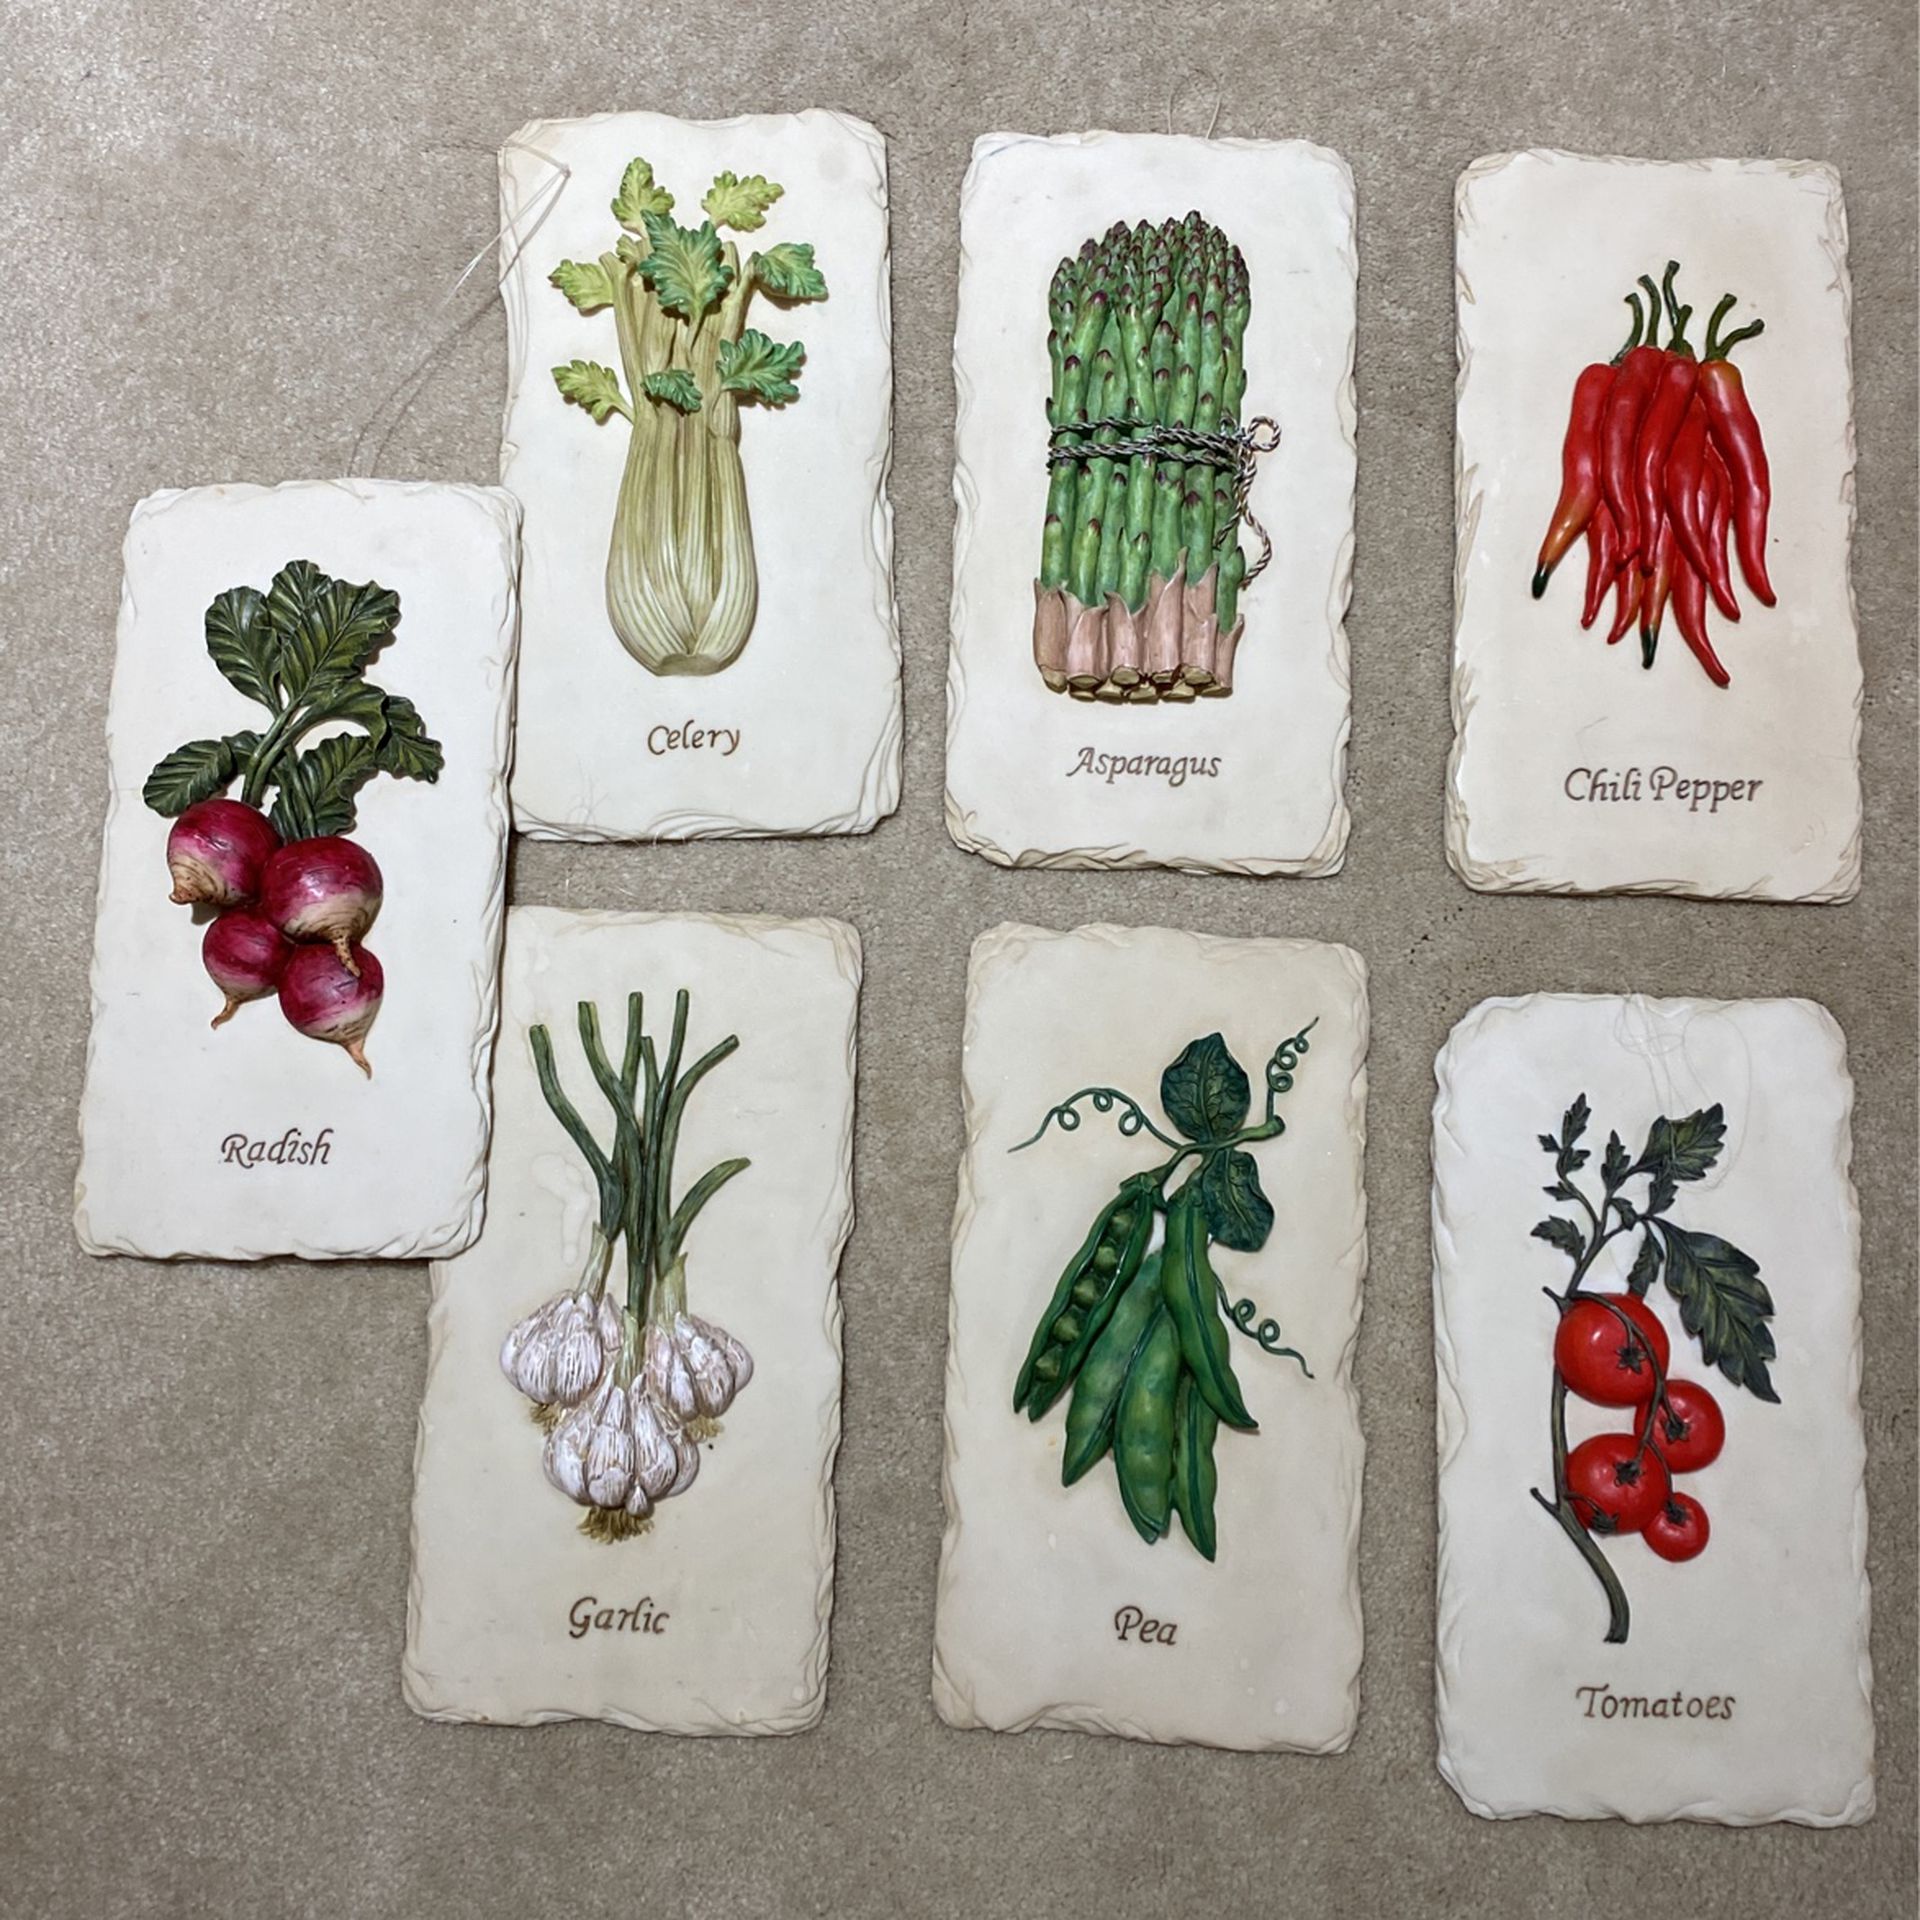 Individual Vegetable Tile Art  - $10 Each